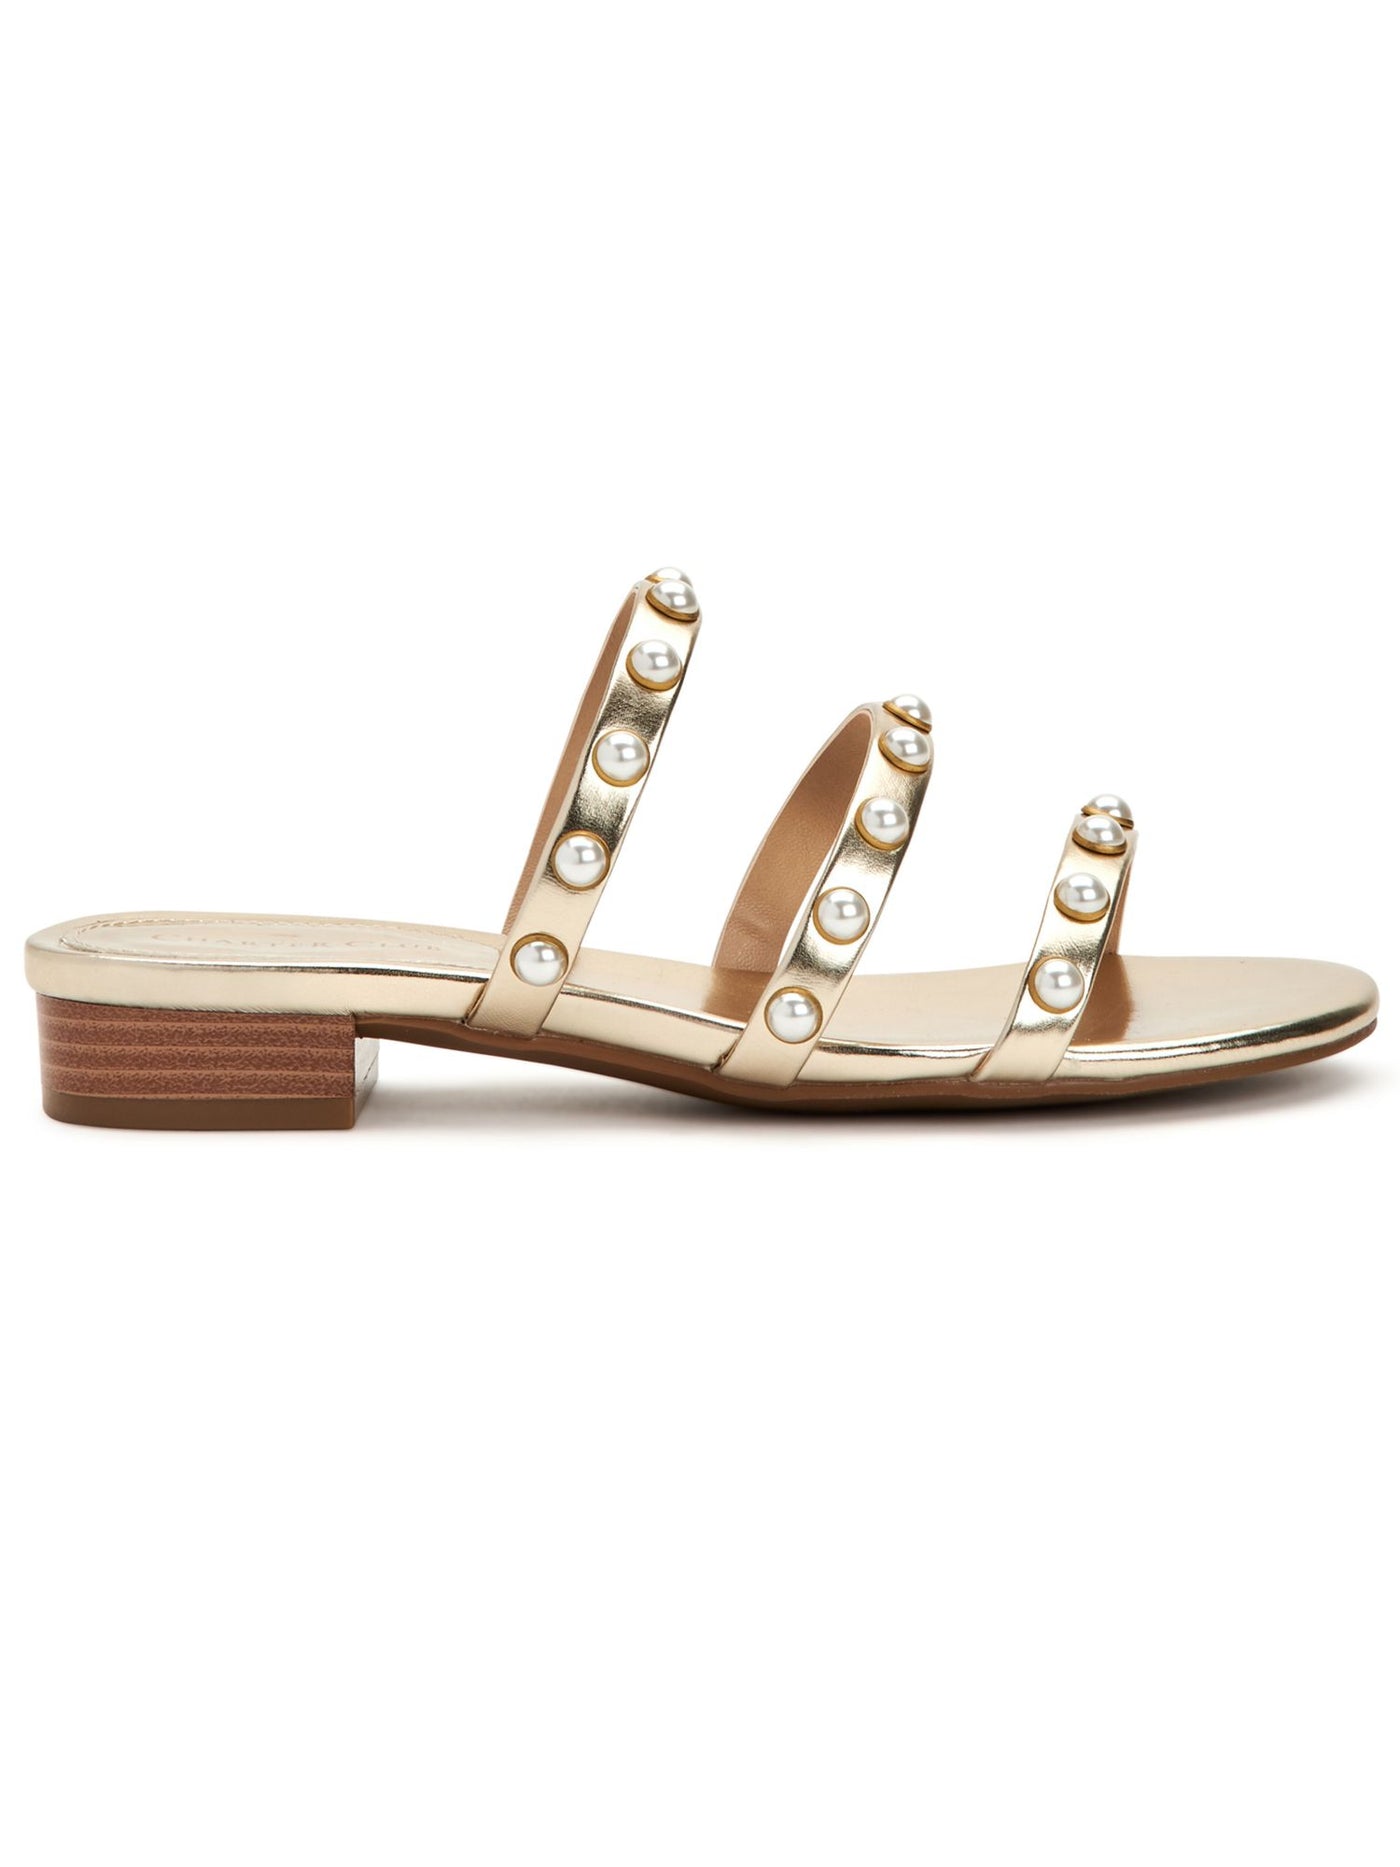 CHARTER CLUB Womens Gold Imitation Pearls Strappy Soraya Almond Toe Slip On Sandals Shoes 9.5 M